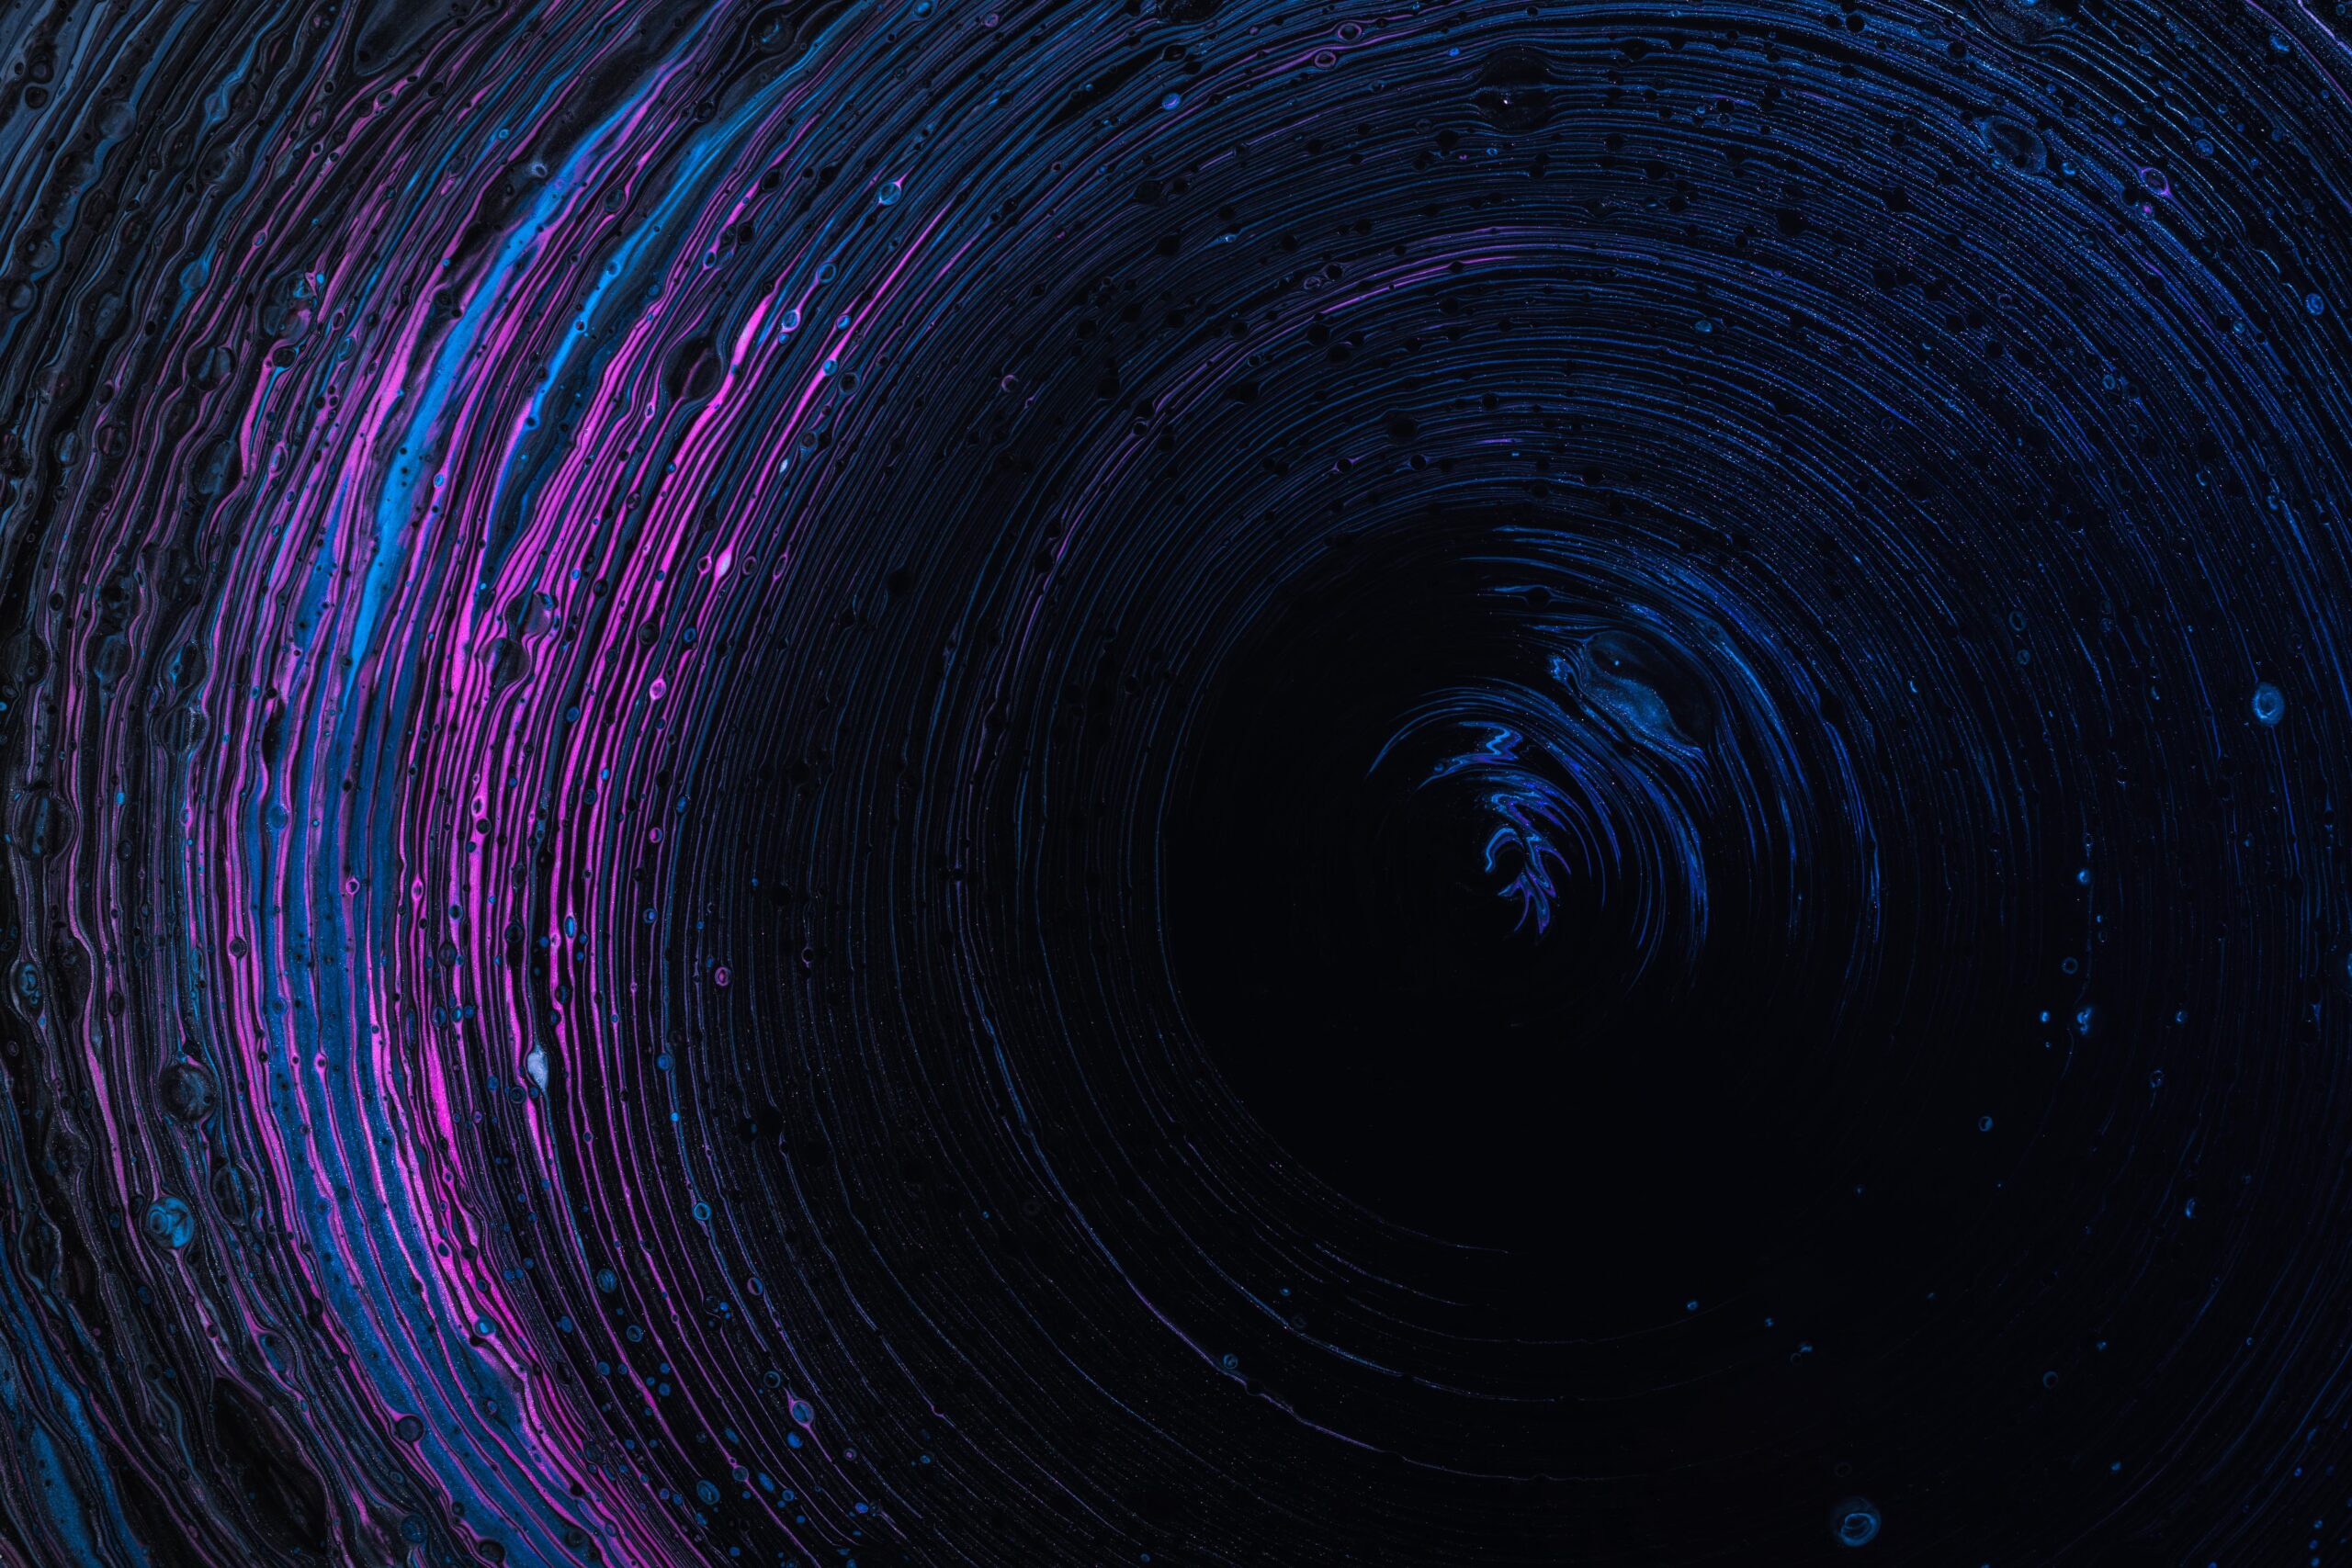 void, blue and pink swirls on a black backround